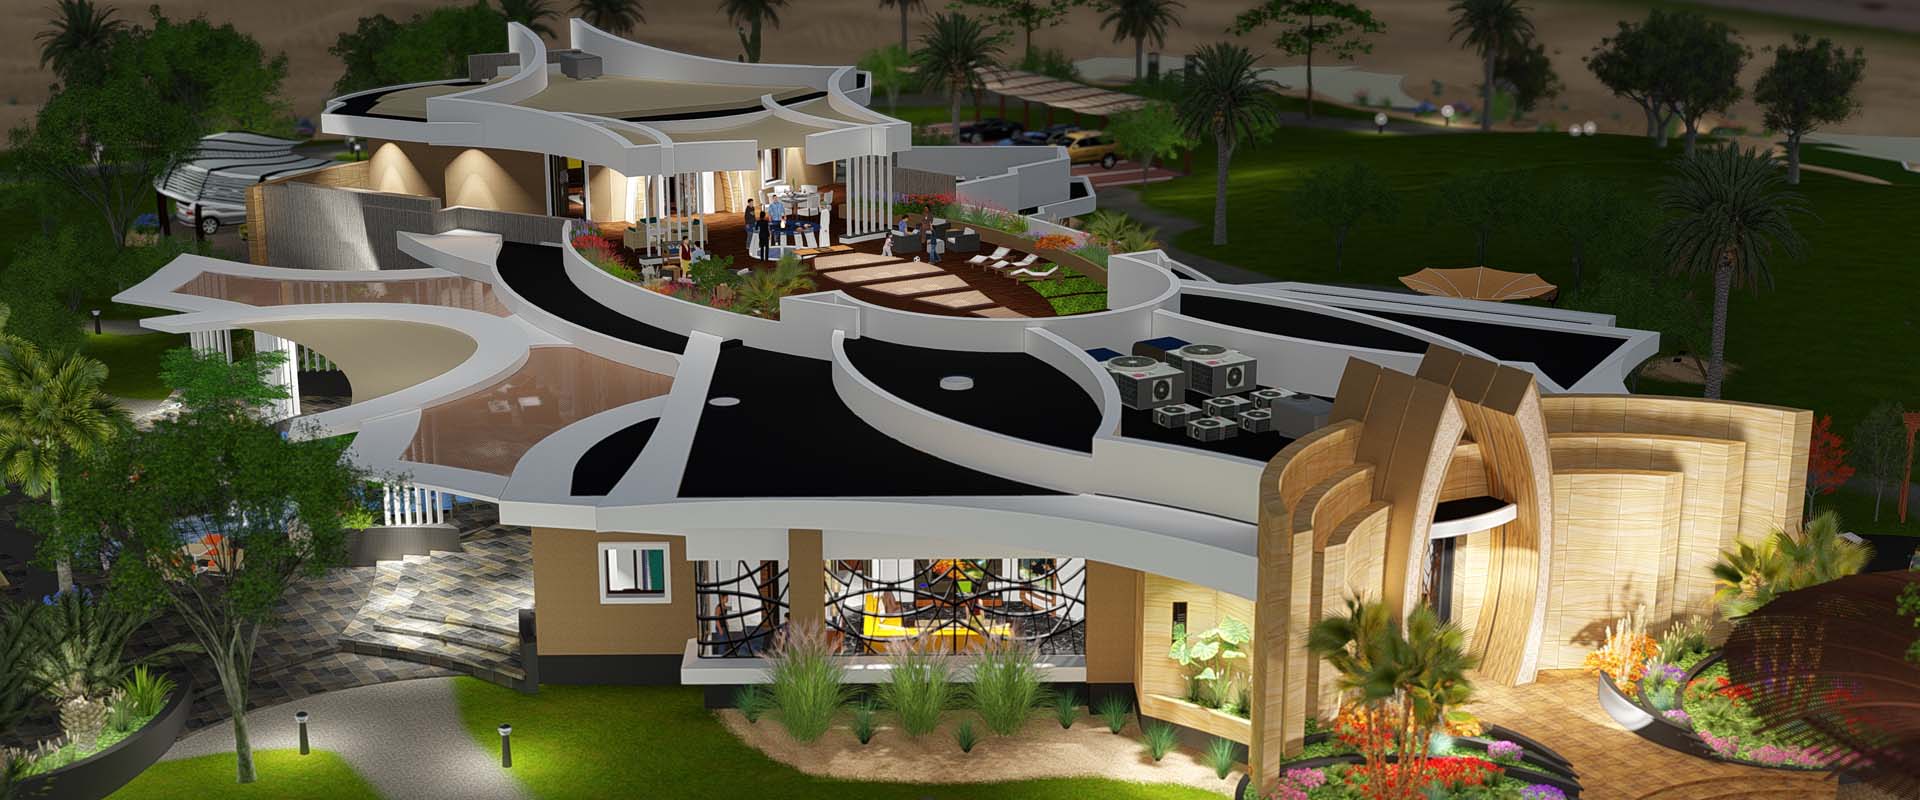 Luxury_Spa_Villa_Modern_Residential_Terrace_SpaceLineDesign.jpeg